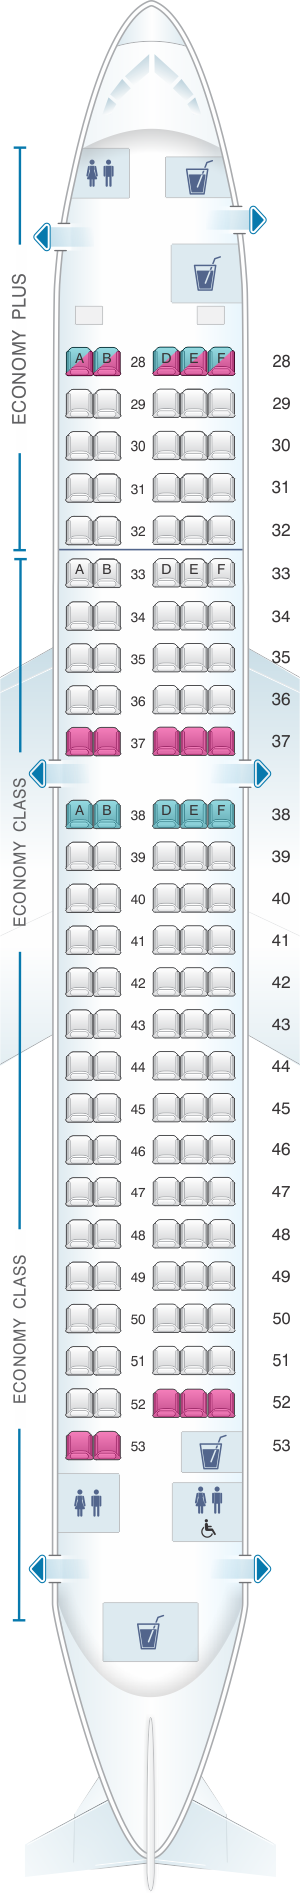 Seat map for Korean Air Airbus A220 300 v1